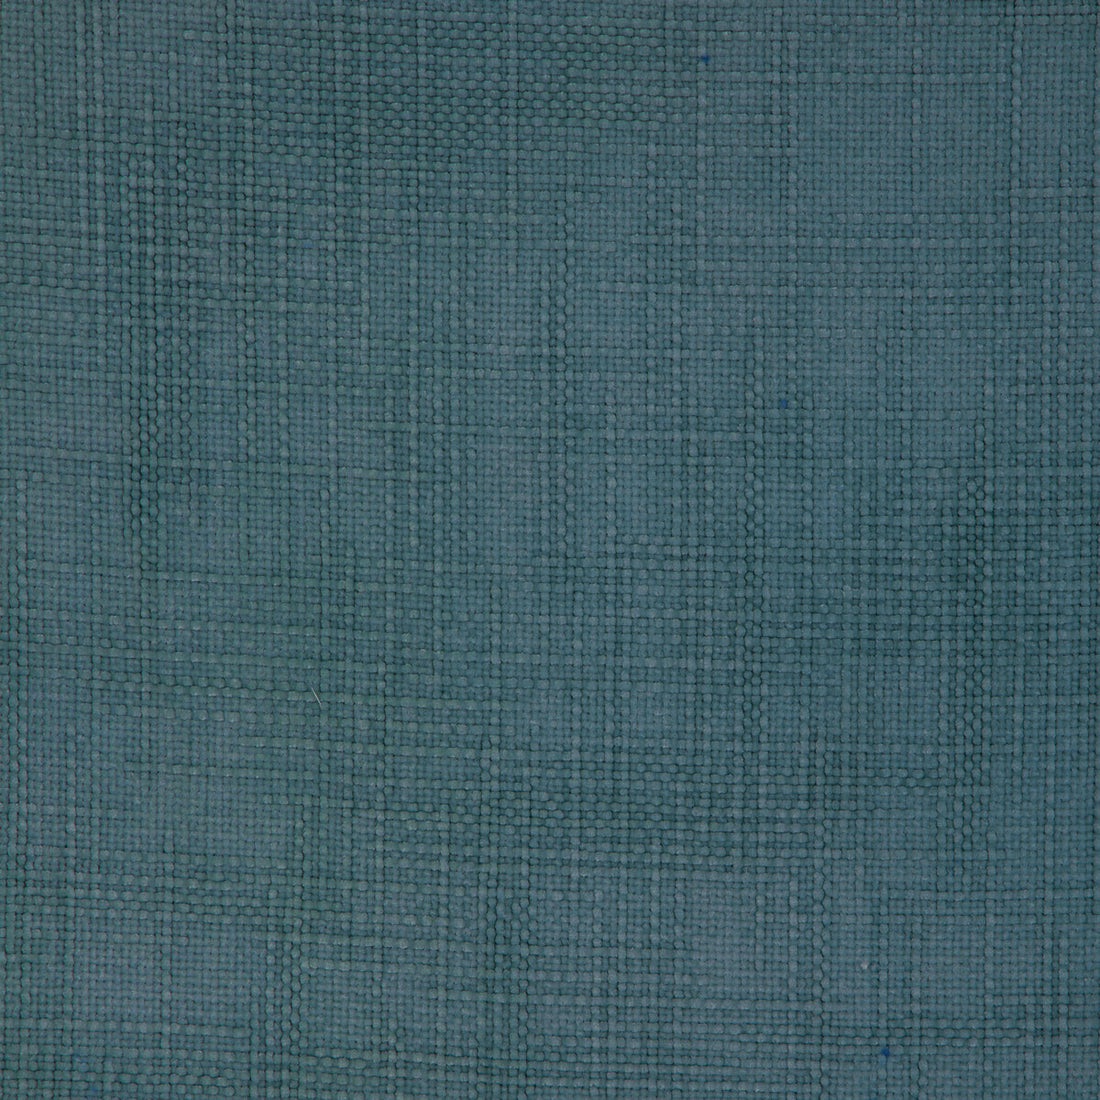 Kravet Smart fabric in 36991-515 color - pattern 36991.515.0 - by Kravet Smart in the Performance Kravetarmor collection